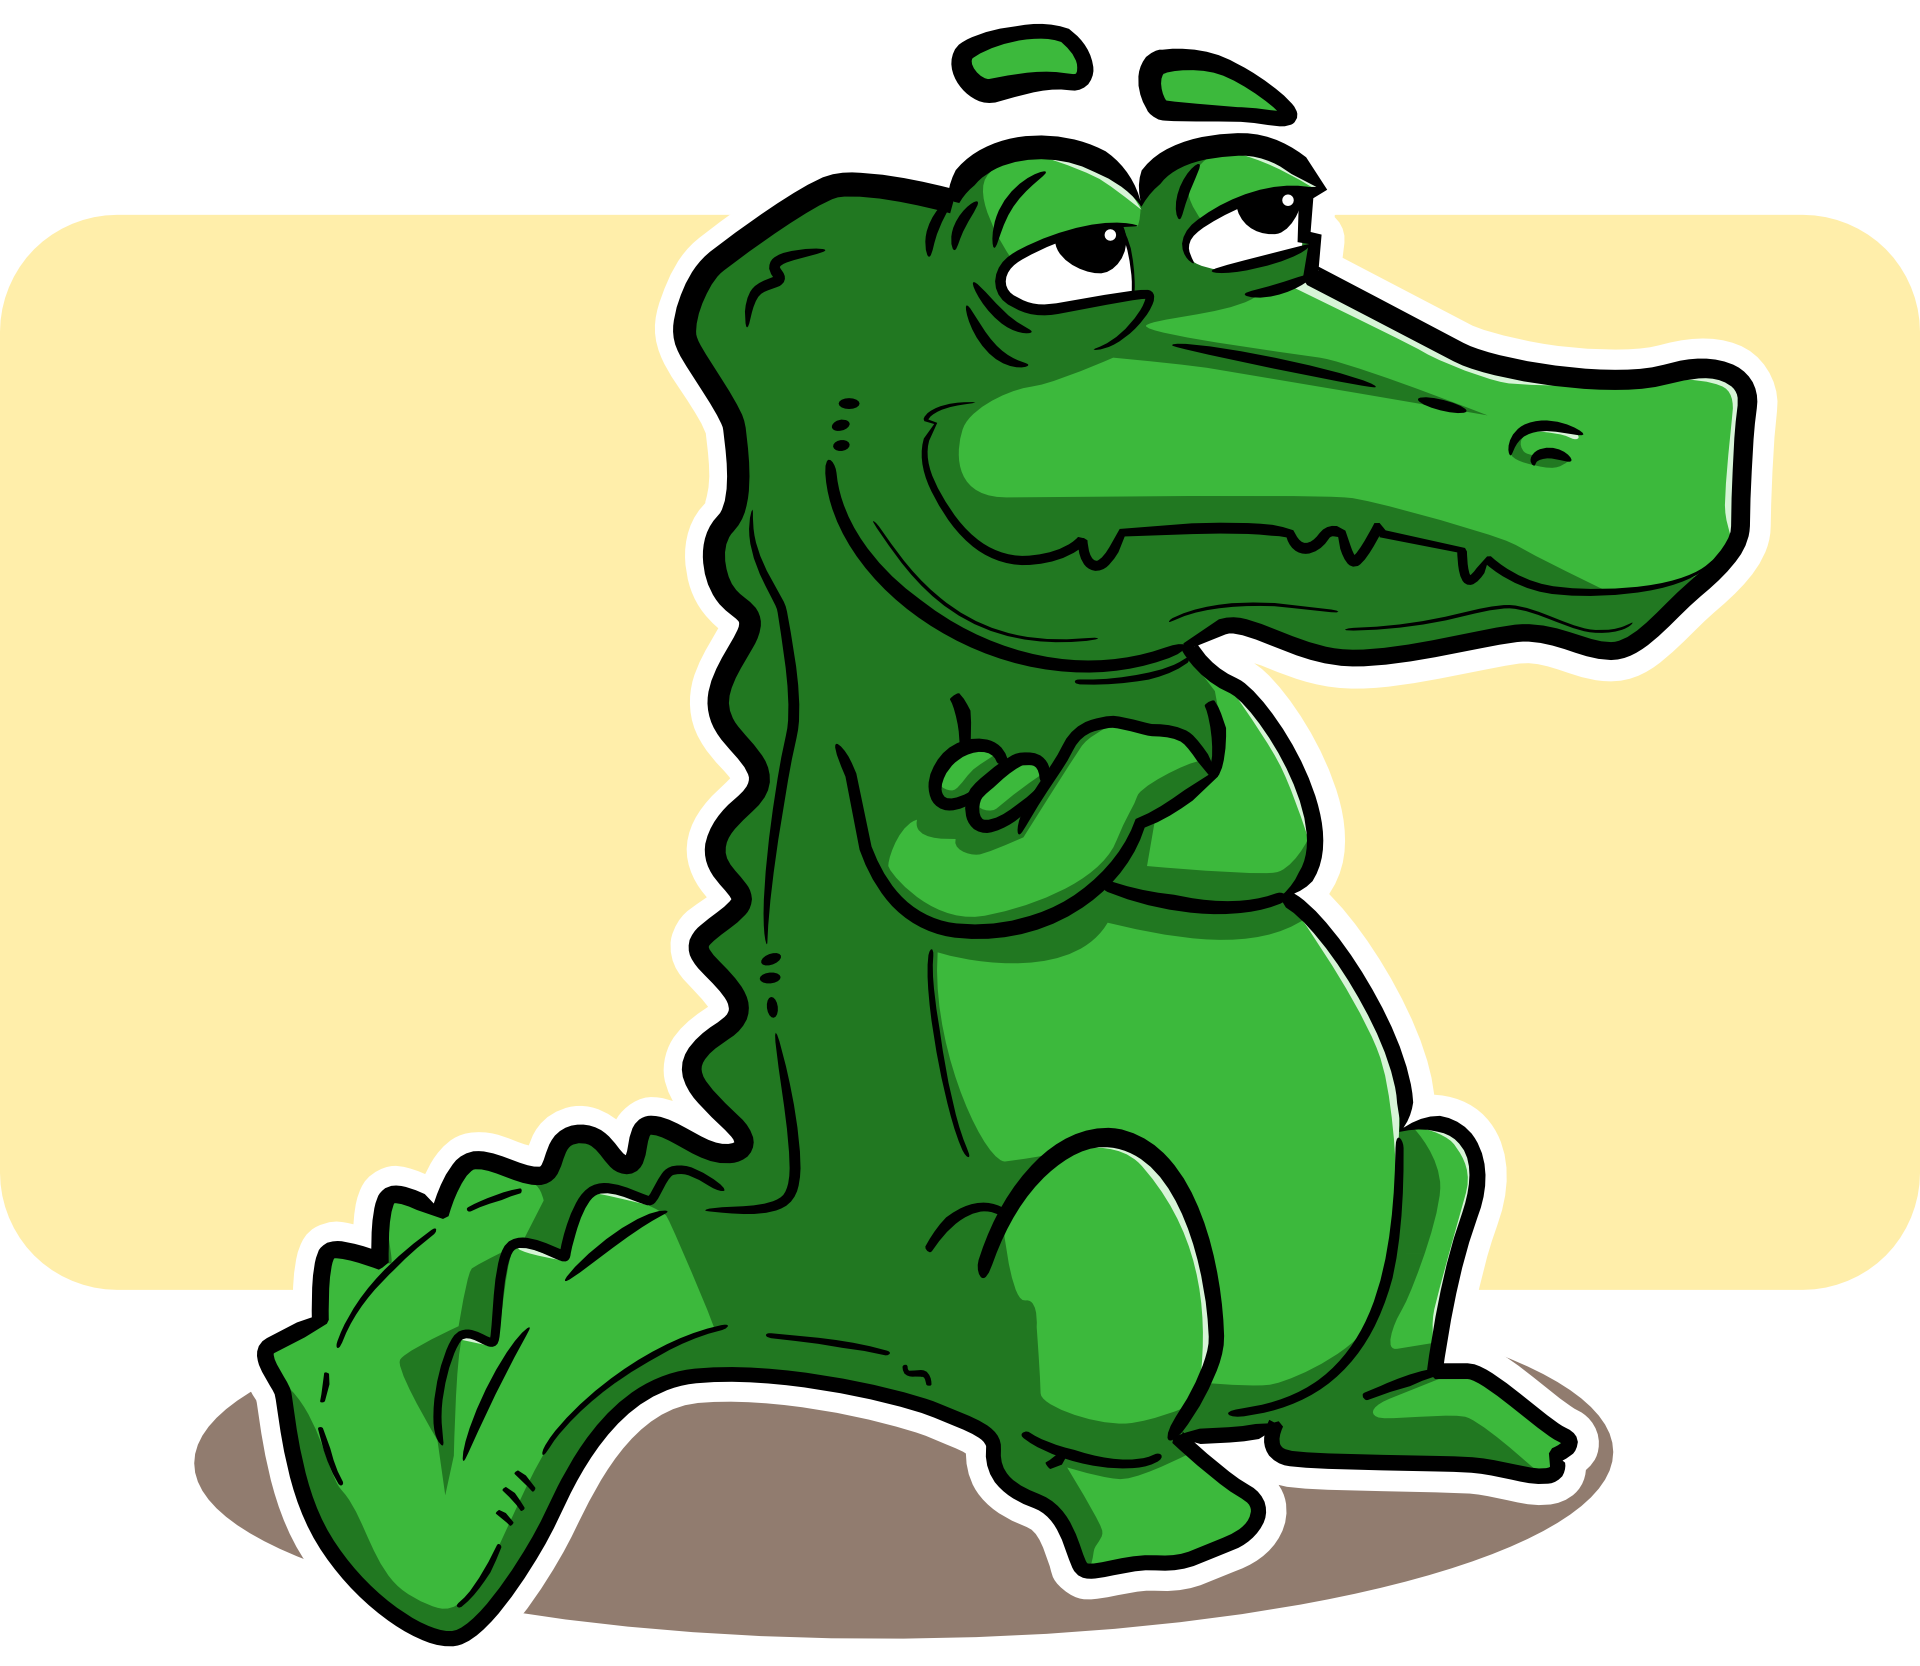 Gator clipart green thing. Alligator images free desktop